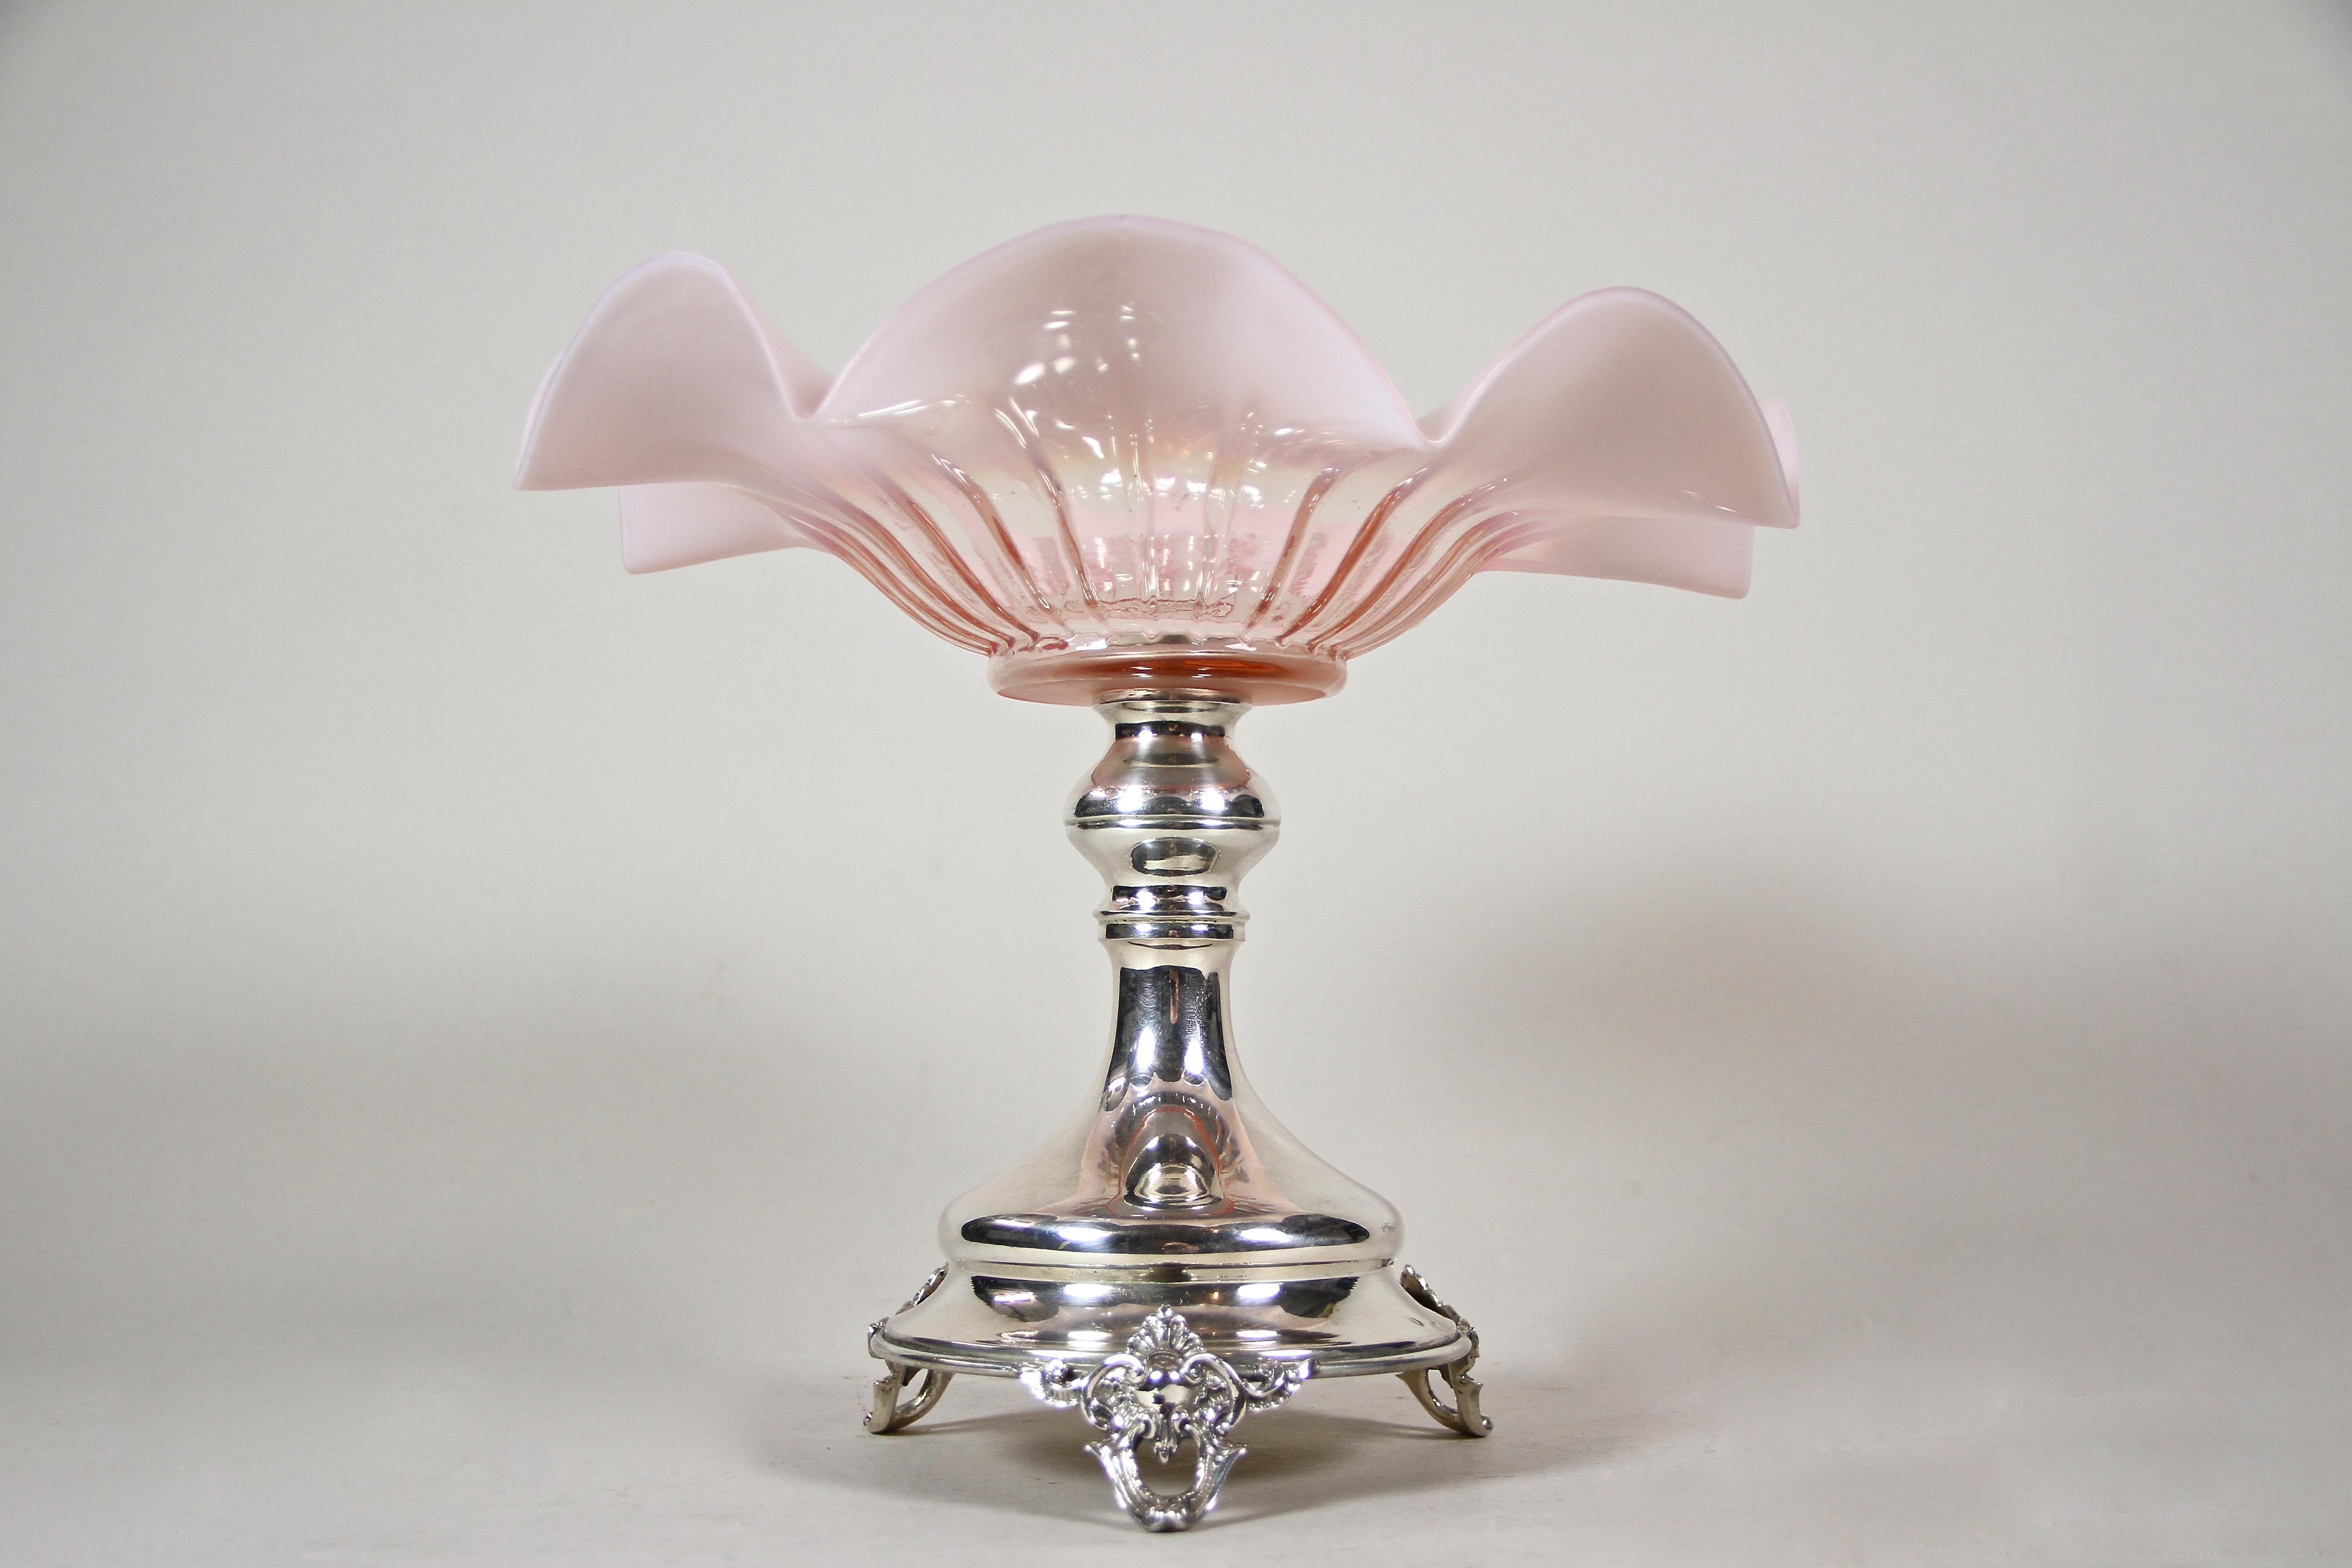 20th Century Art Nouveau Silver Centerpiece with Ruffled Pink Glass Bowl, Austria, ca. 1900